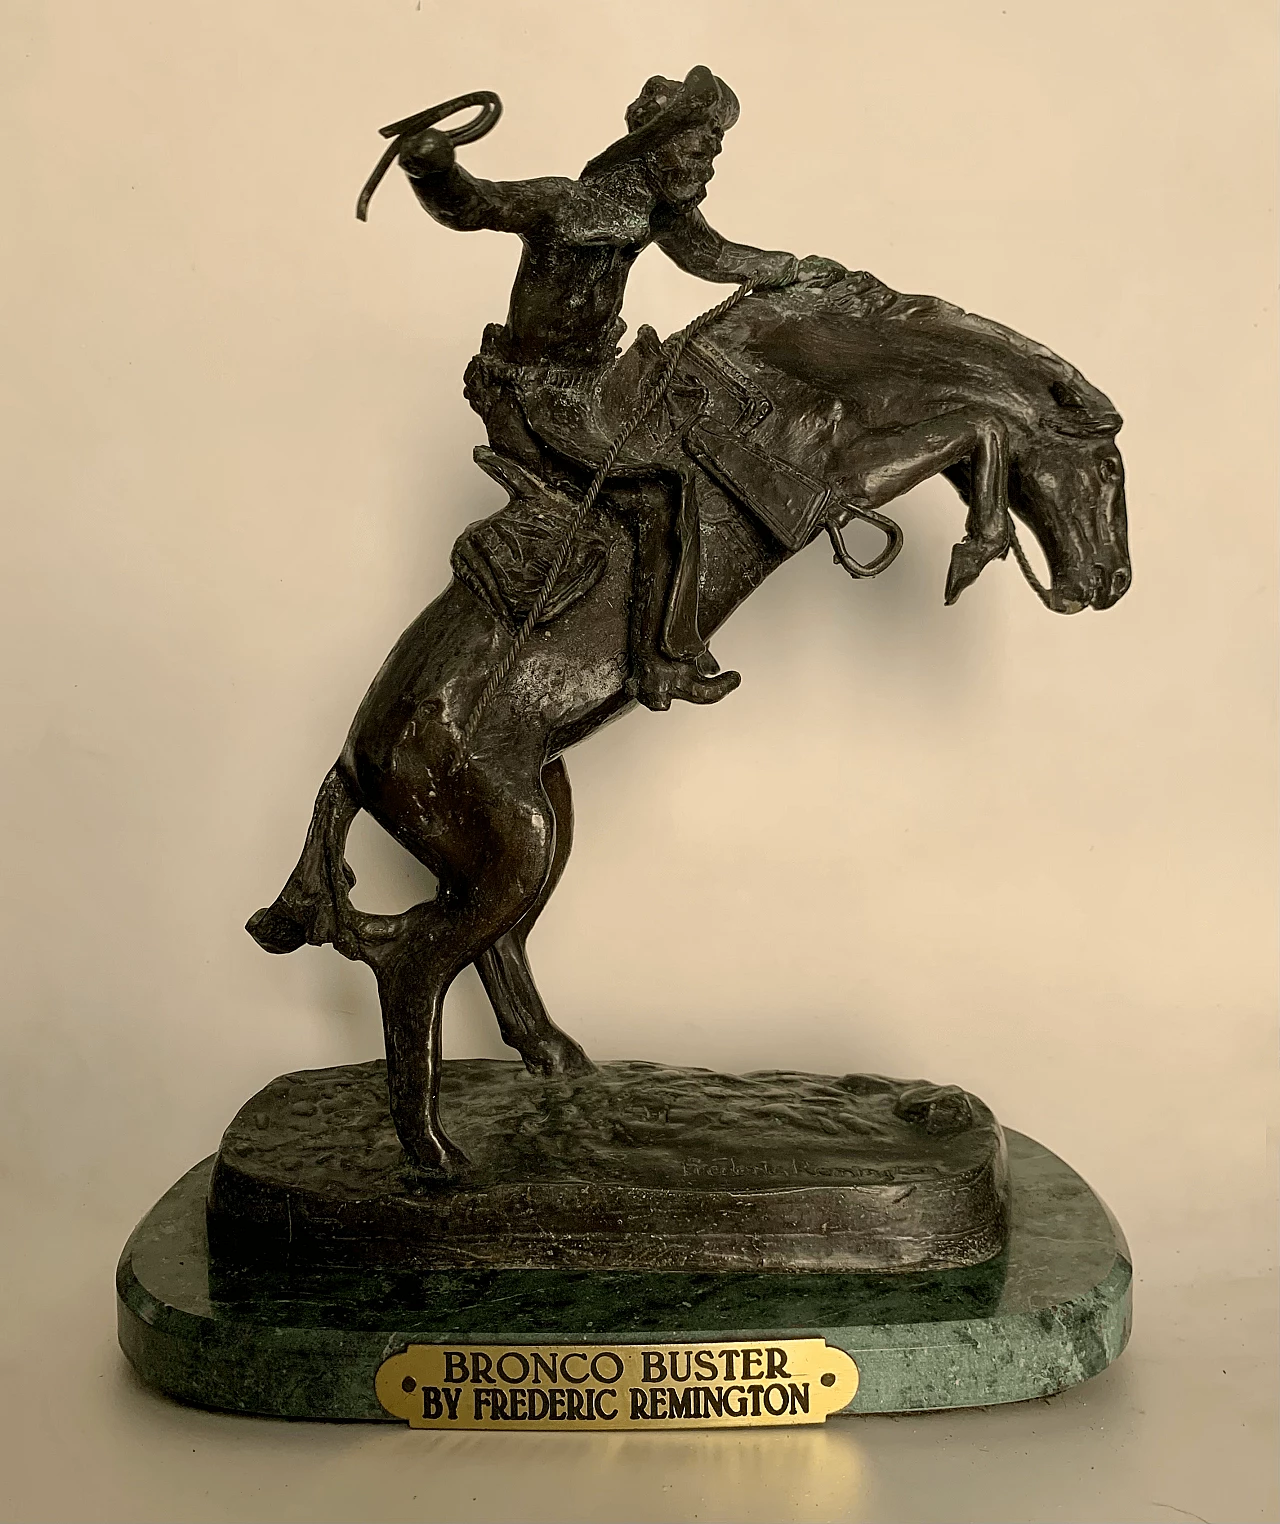 Frederic Remington, Bronco Buster, bronze sculpture 1